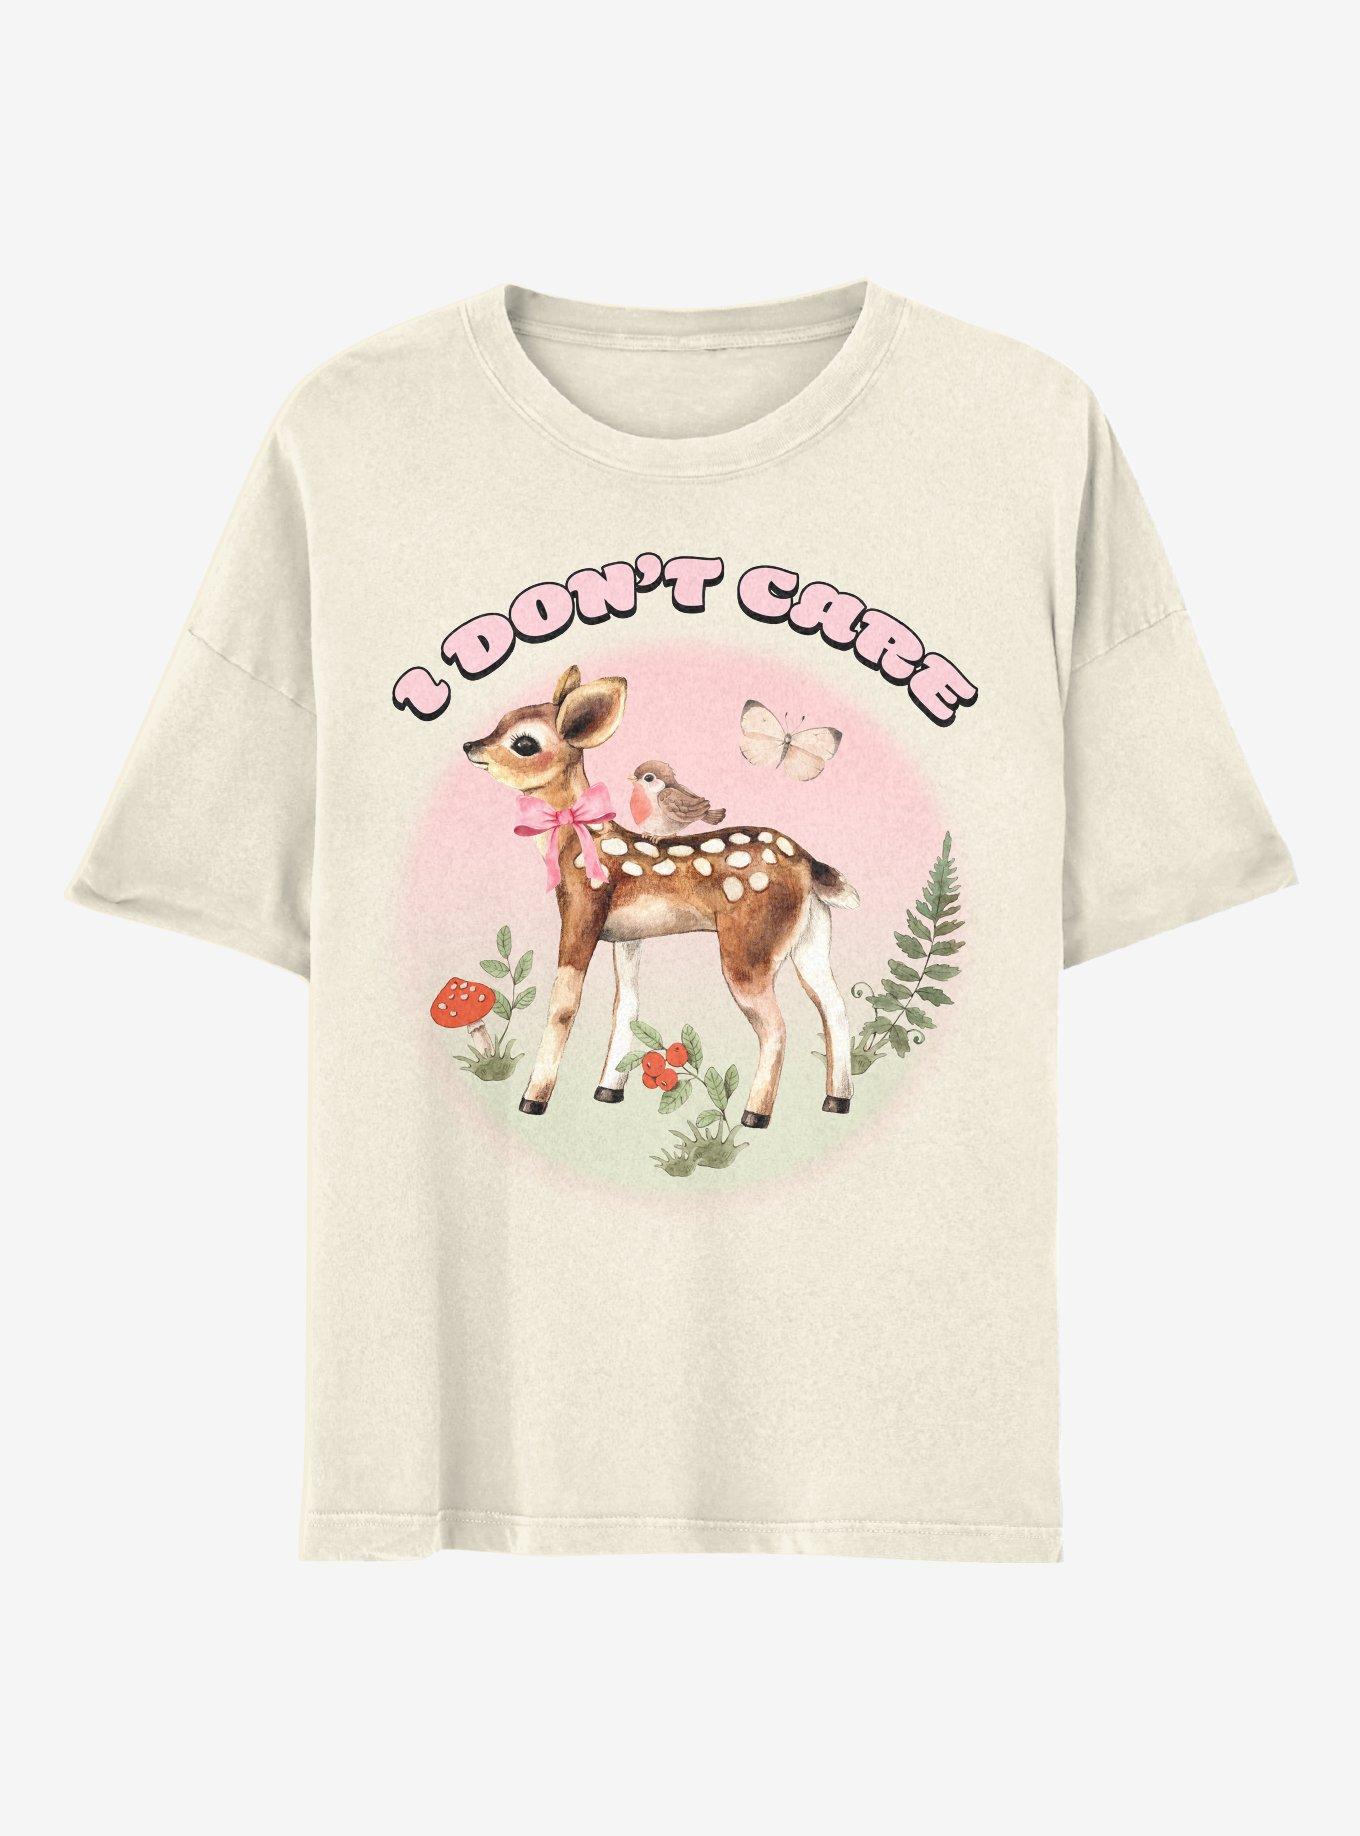 Baby Deer I Don't Care Boyfriend Fit Girls T-Shirt, MULTI, hi-res